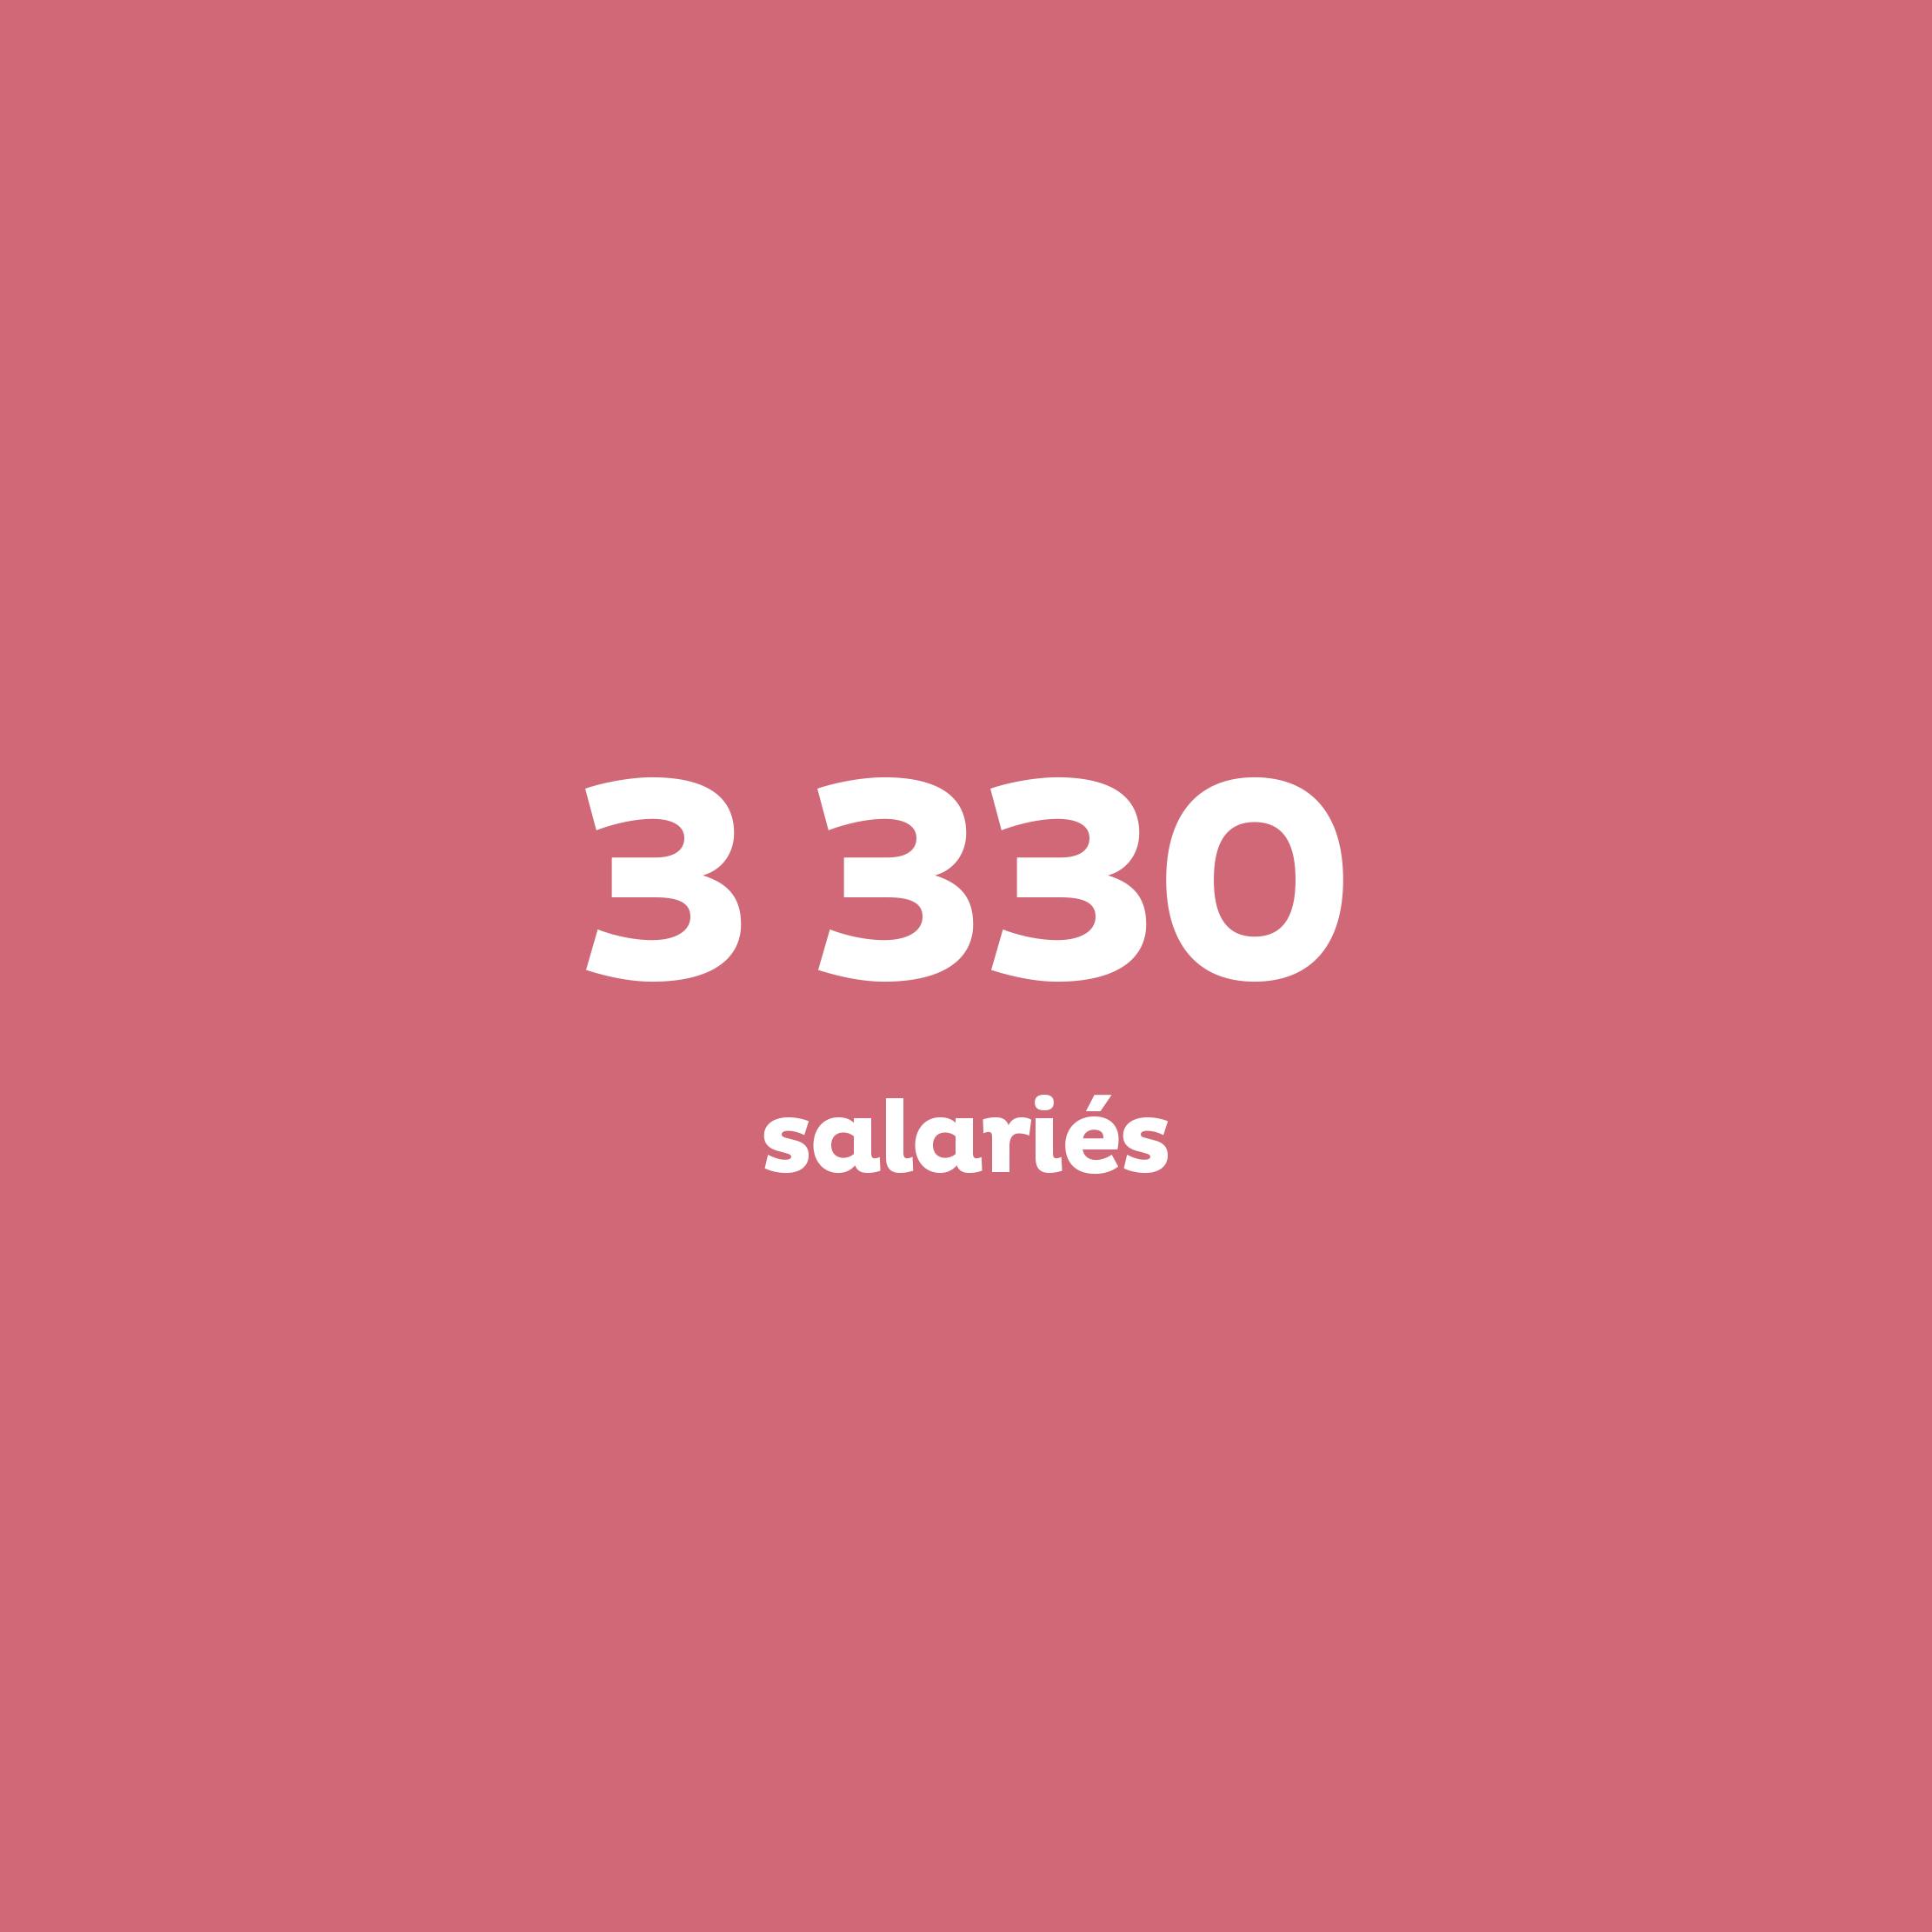 3 330 salariés